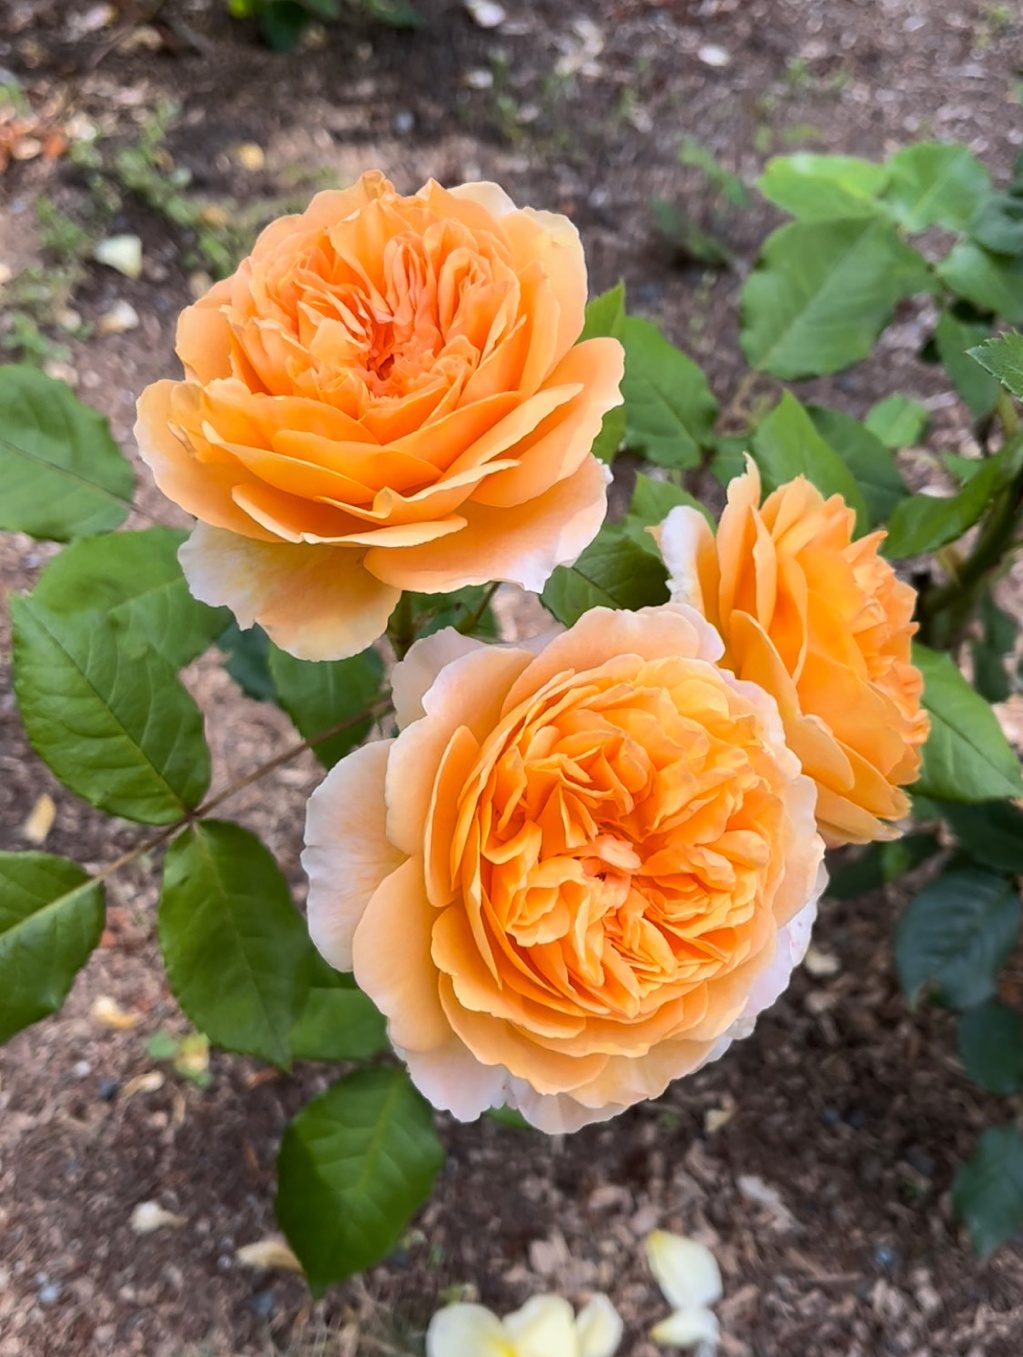 Orange garden roses blooming in July